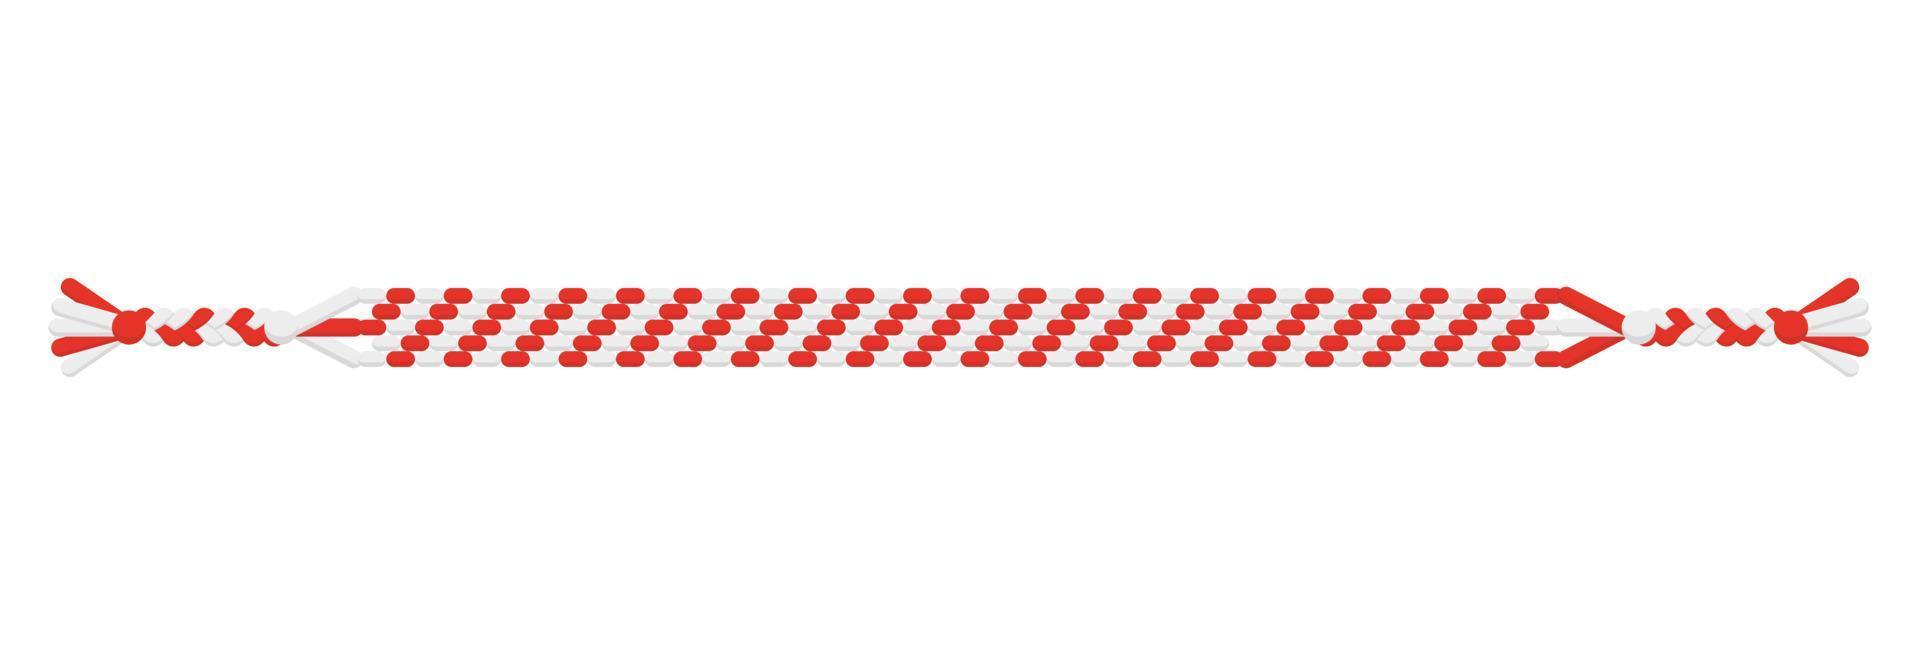 Vector Christmas handmade hippie striped friendship bracelet of white and  redthreads. 4676905 Vector Art at Vecteezy